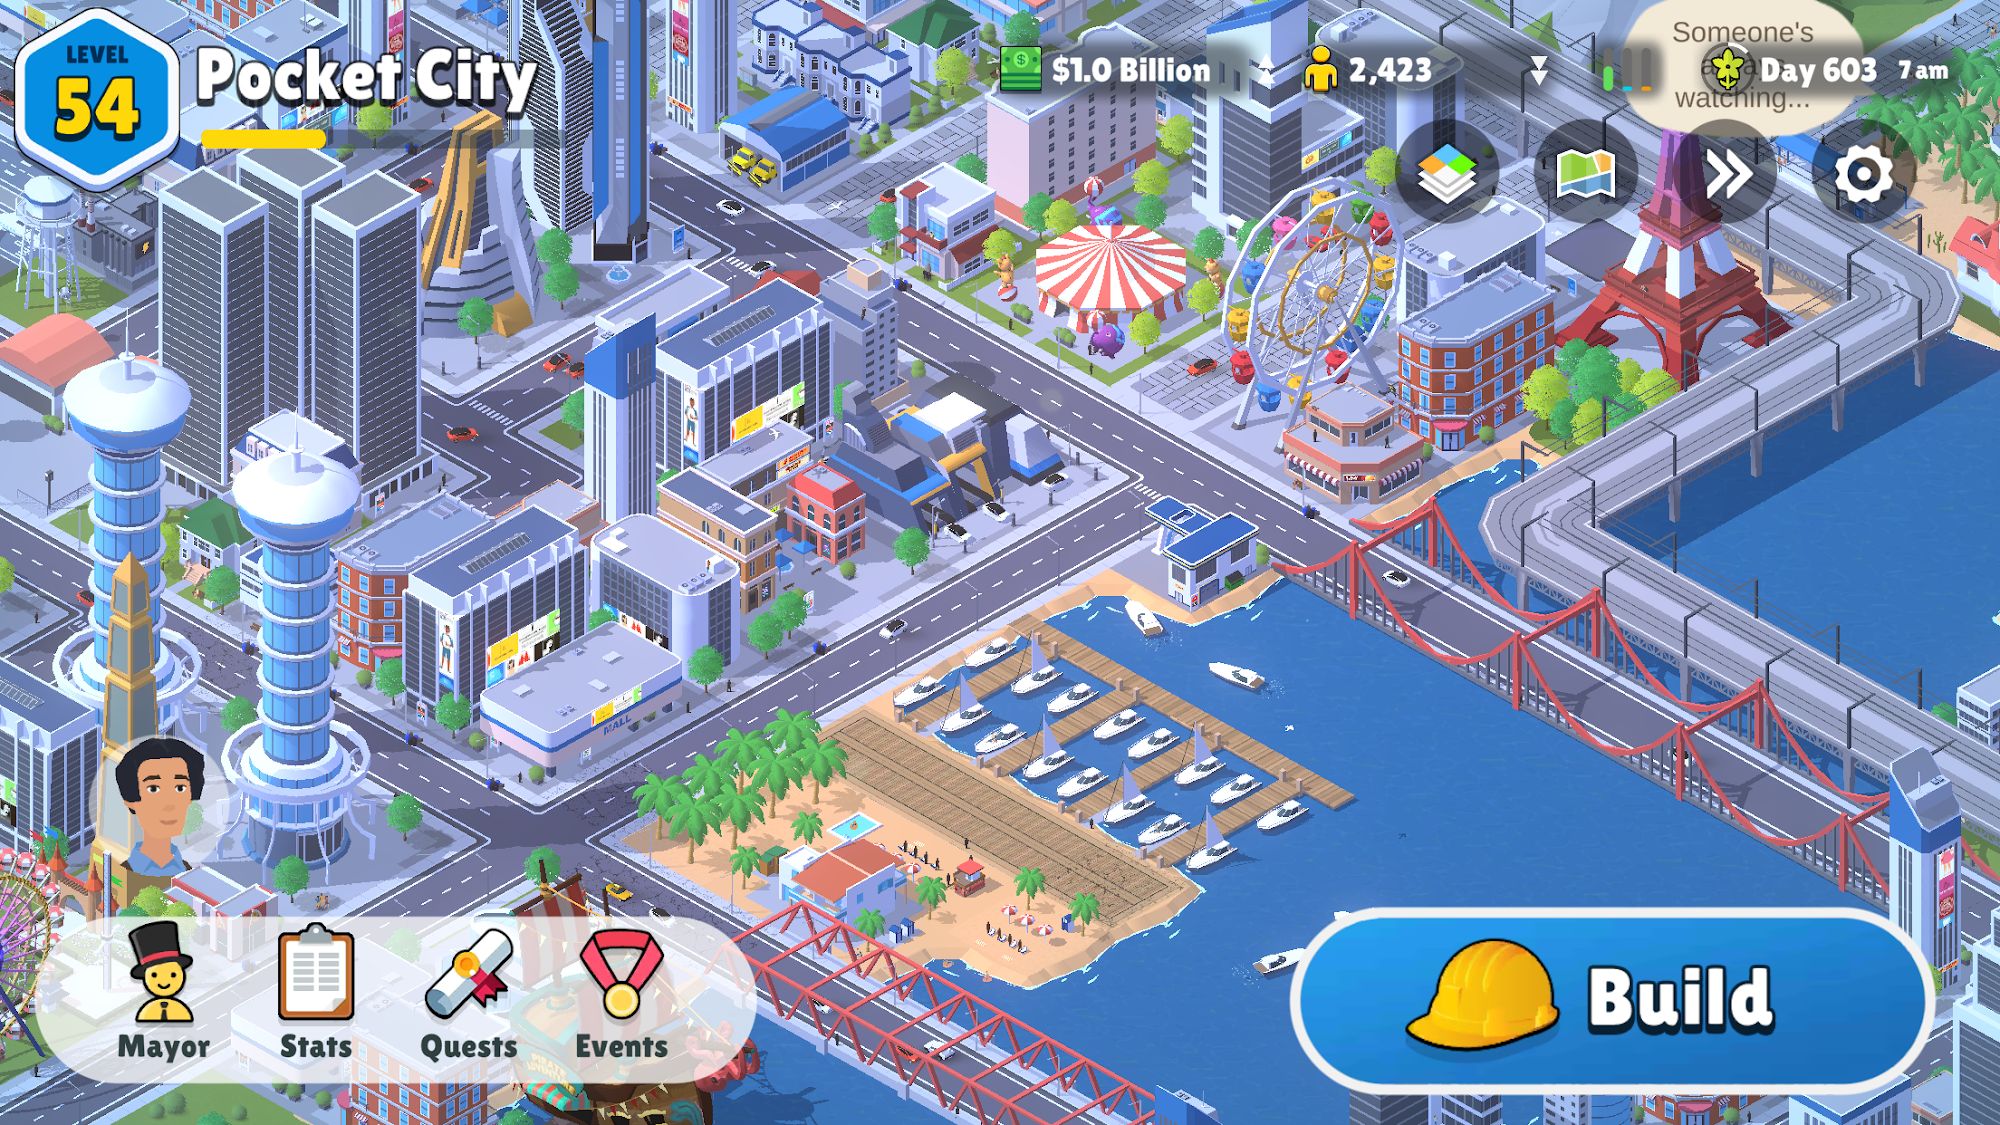 Download Pocket City 2 für Android kostenlos.